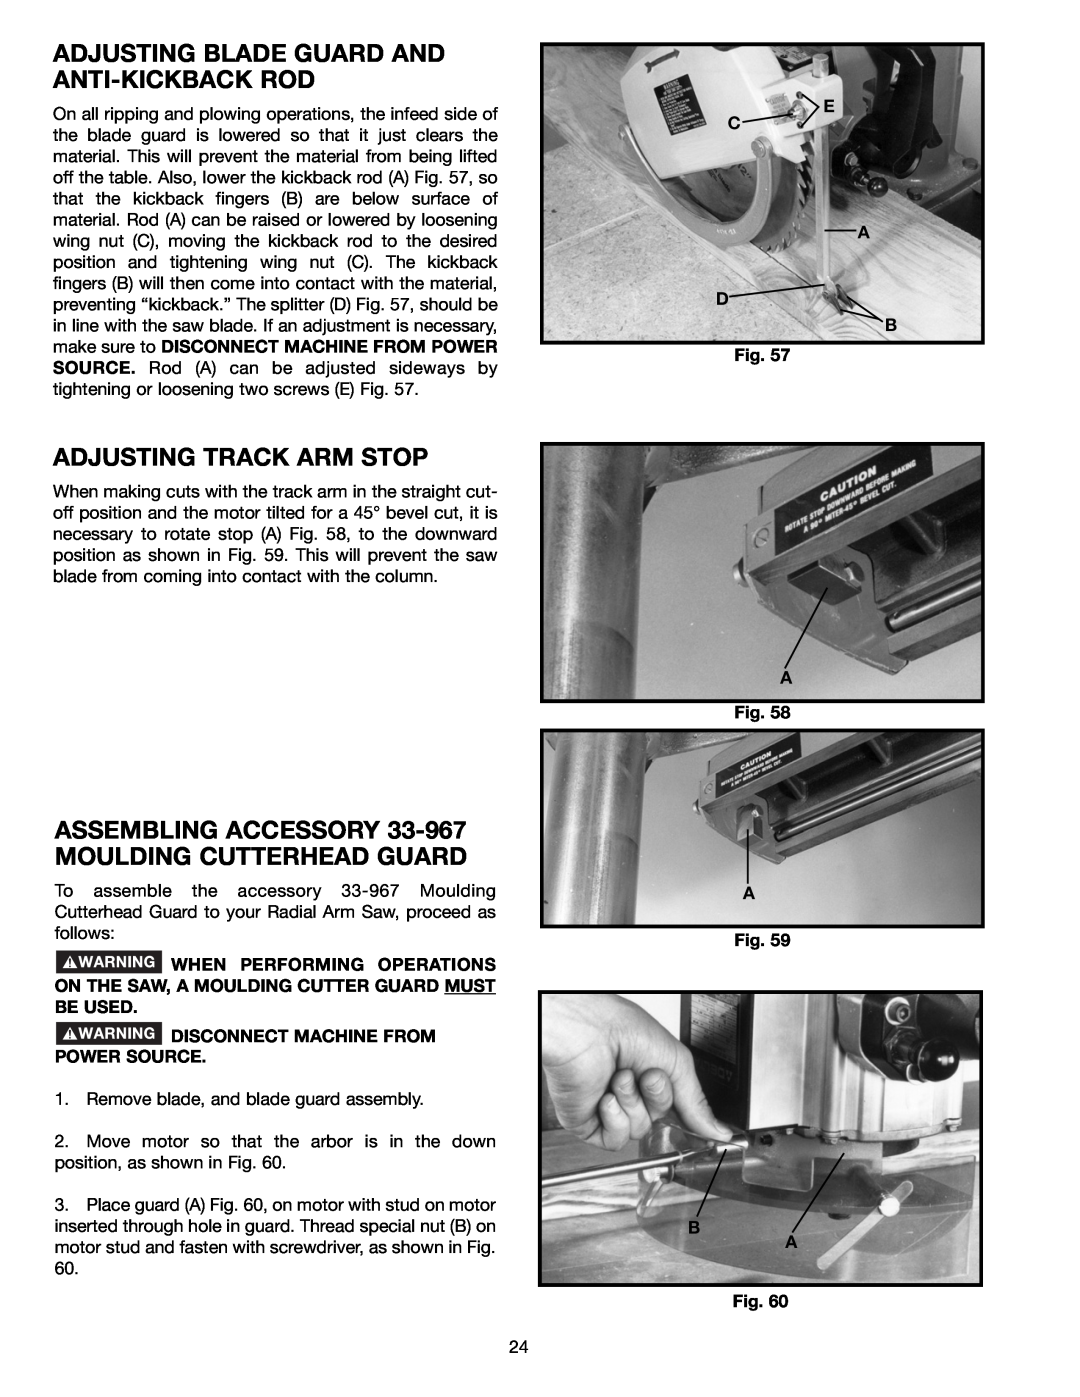 Porter-Cable 33-892, 33-890, 33-891 Adjusting Blade Guard And Anti-Kickback Rod, Adjusting Track Arm Stop, E C A D B 